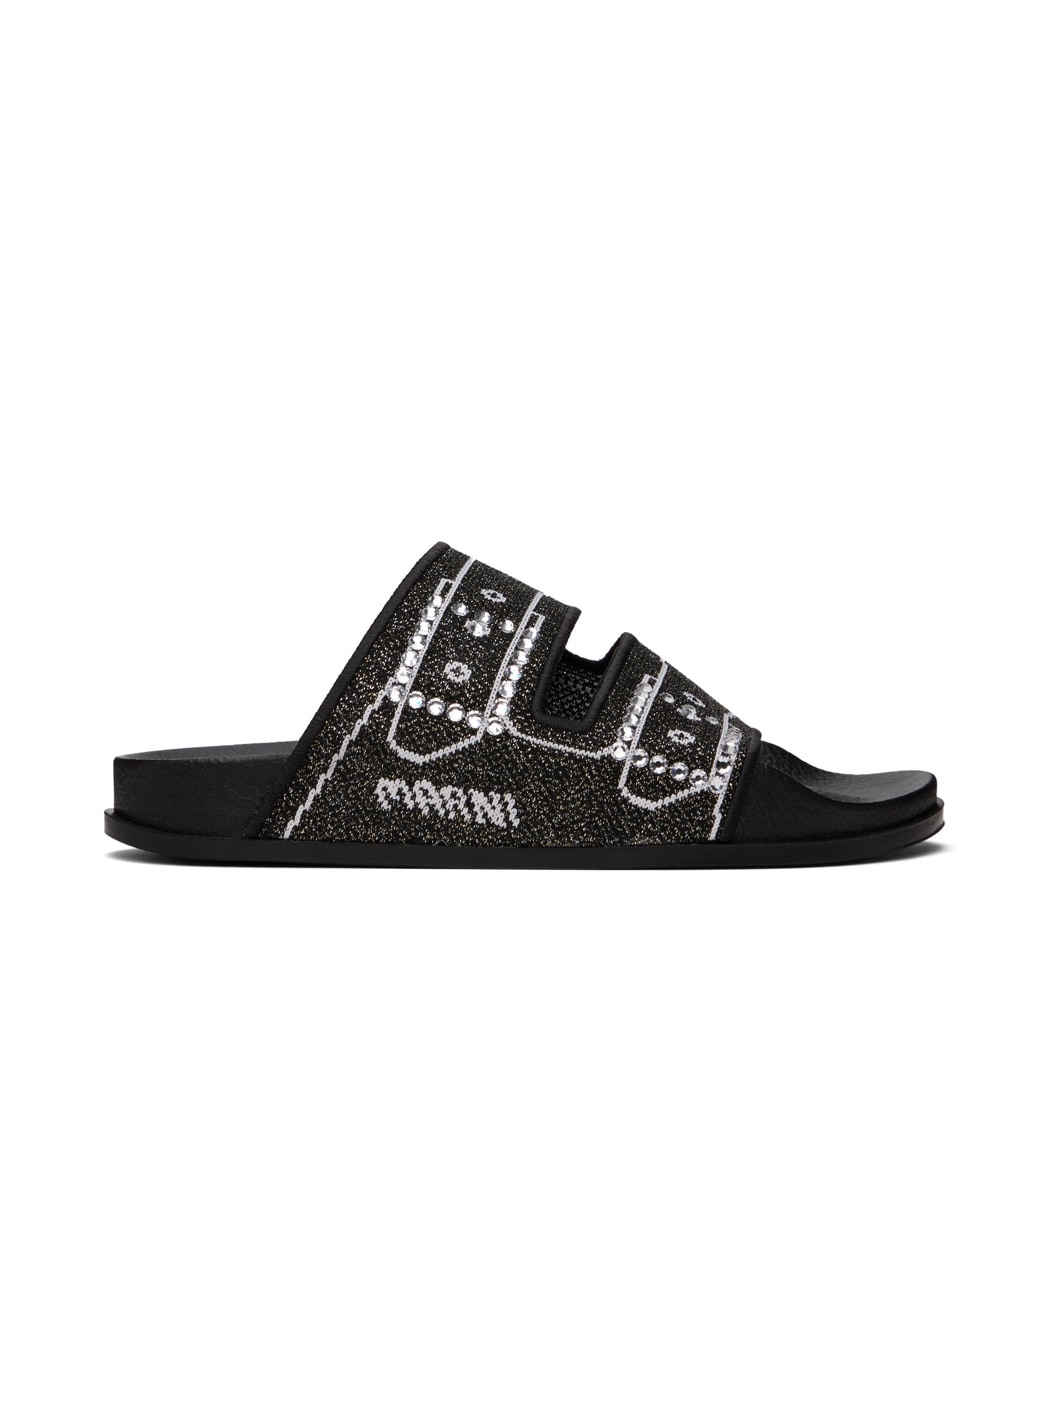 Black Jacquard Sandals - 1